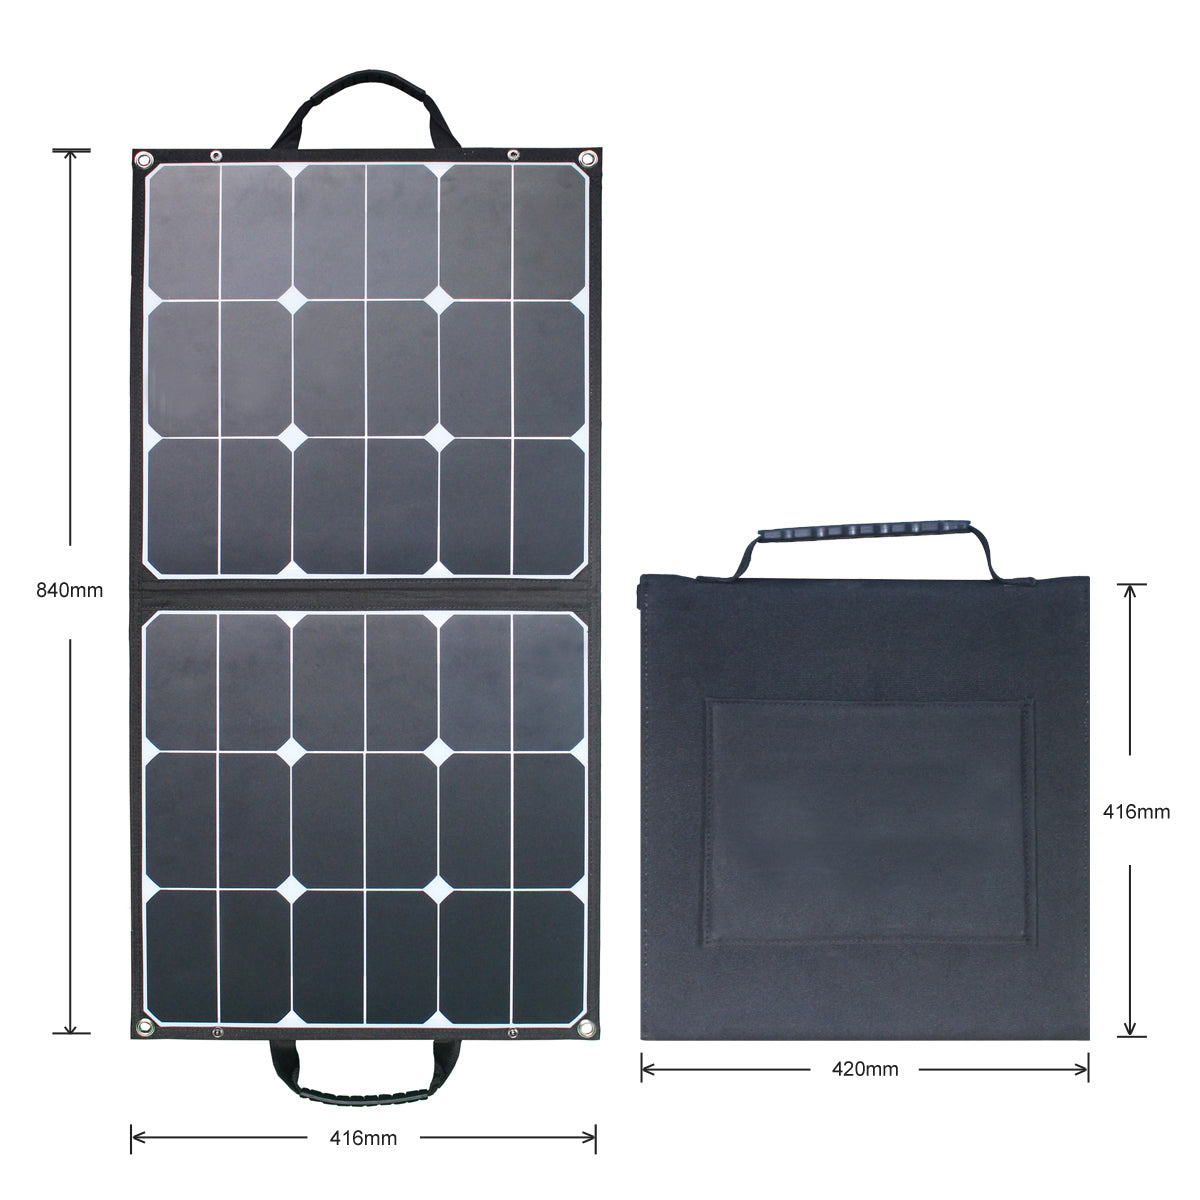 ACOPOWER 60 Watt Monocrystalline Foldable Solar Panel